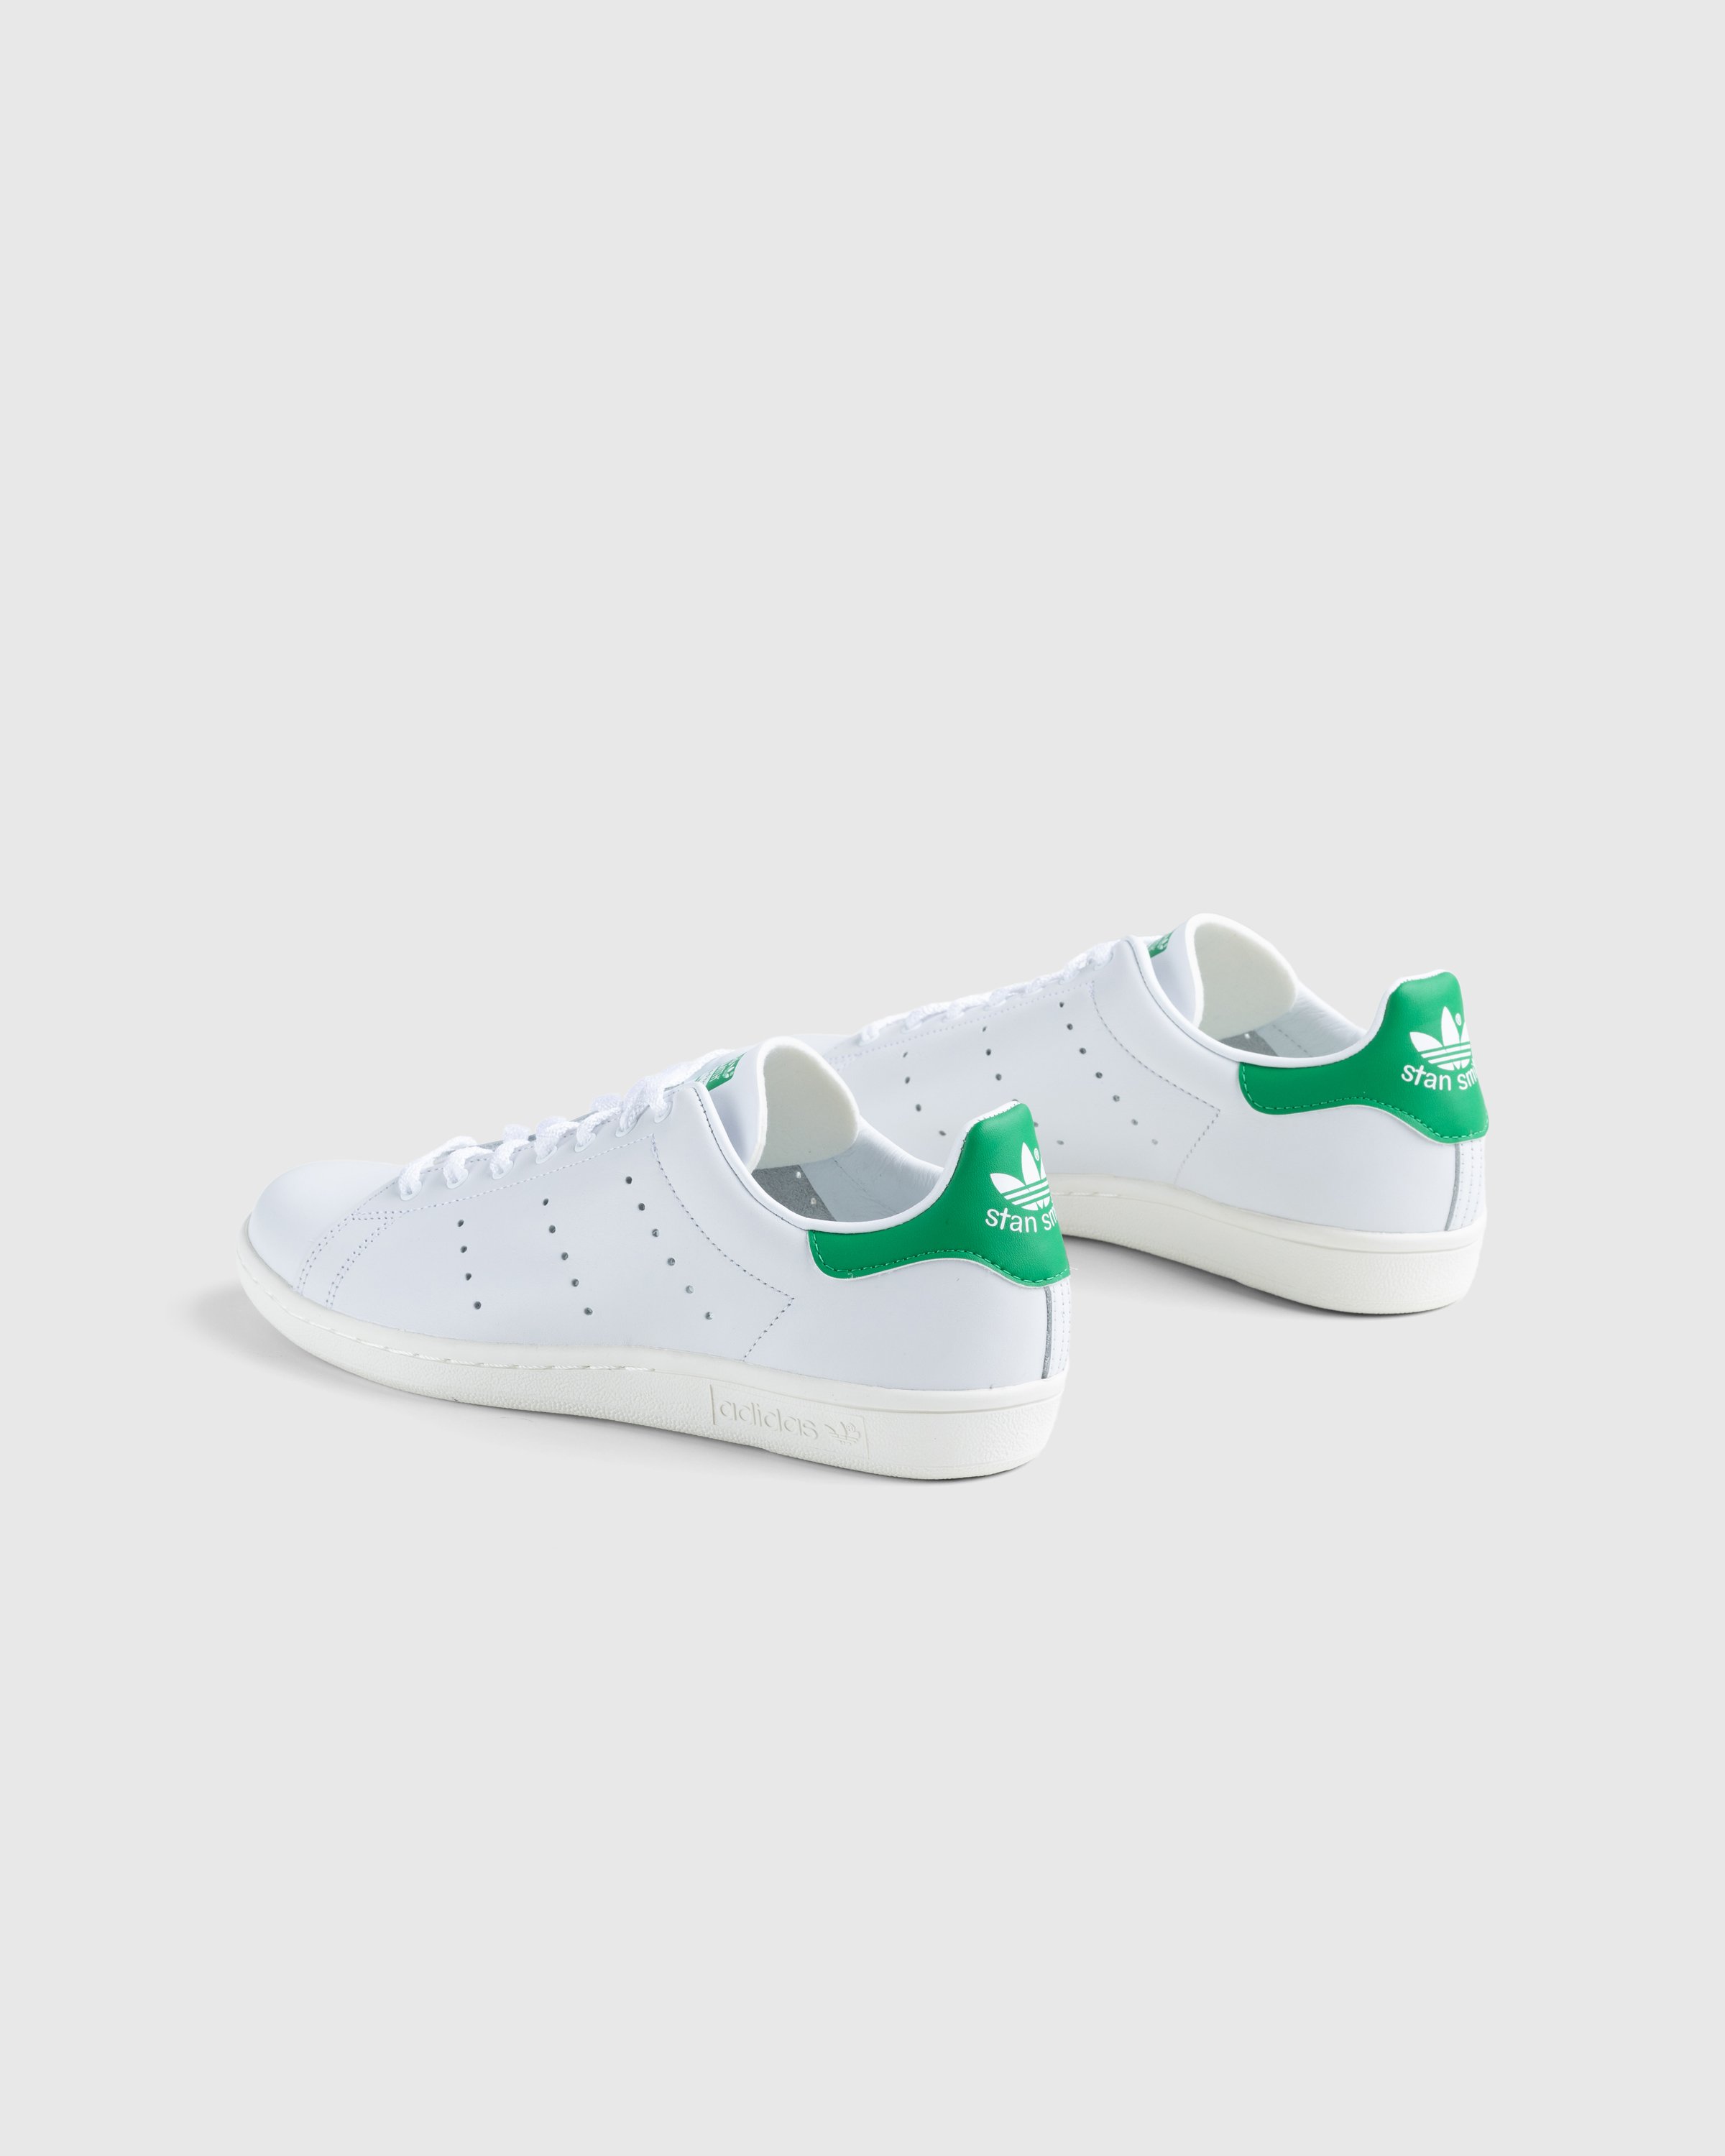 Adidas - Stan Smith 80s - Footwear - White - Image 4